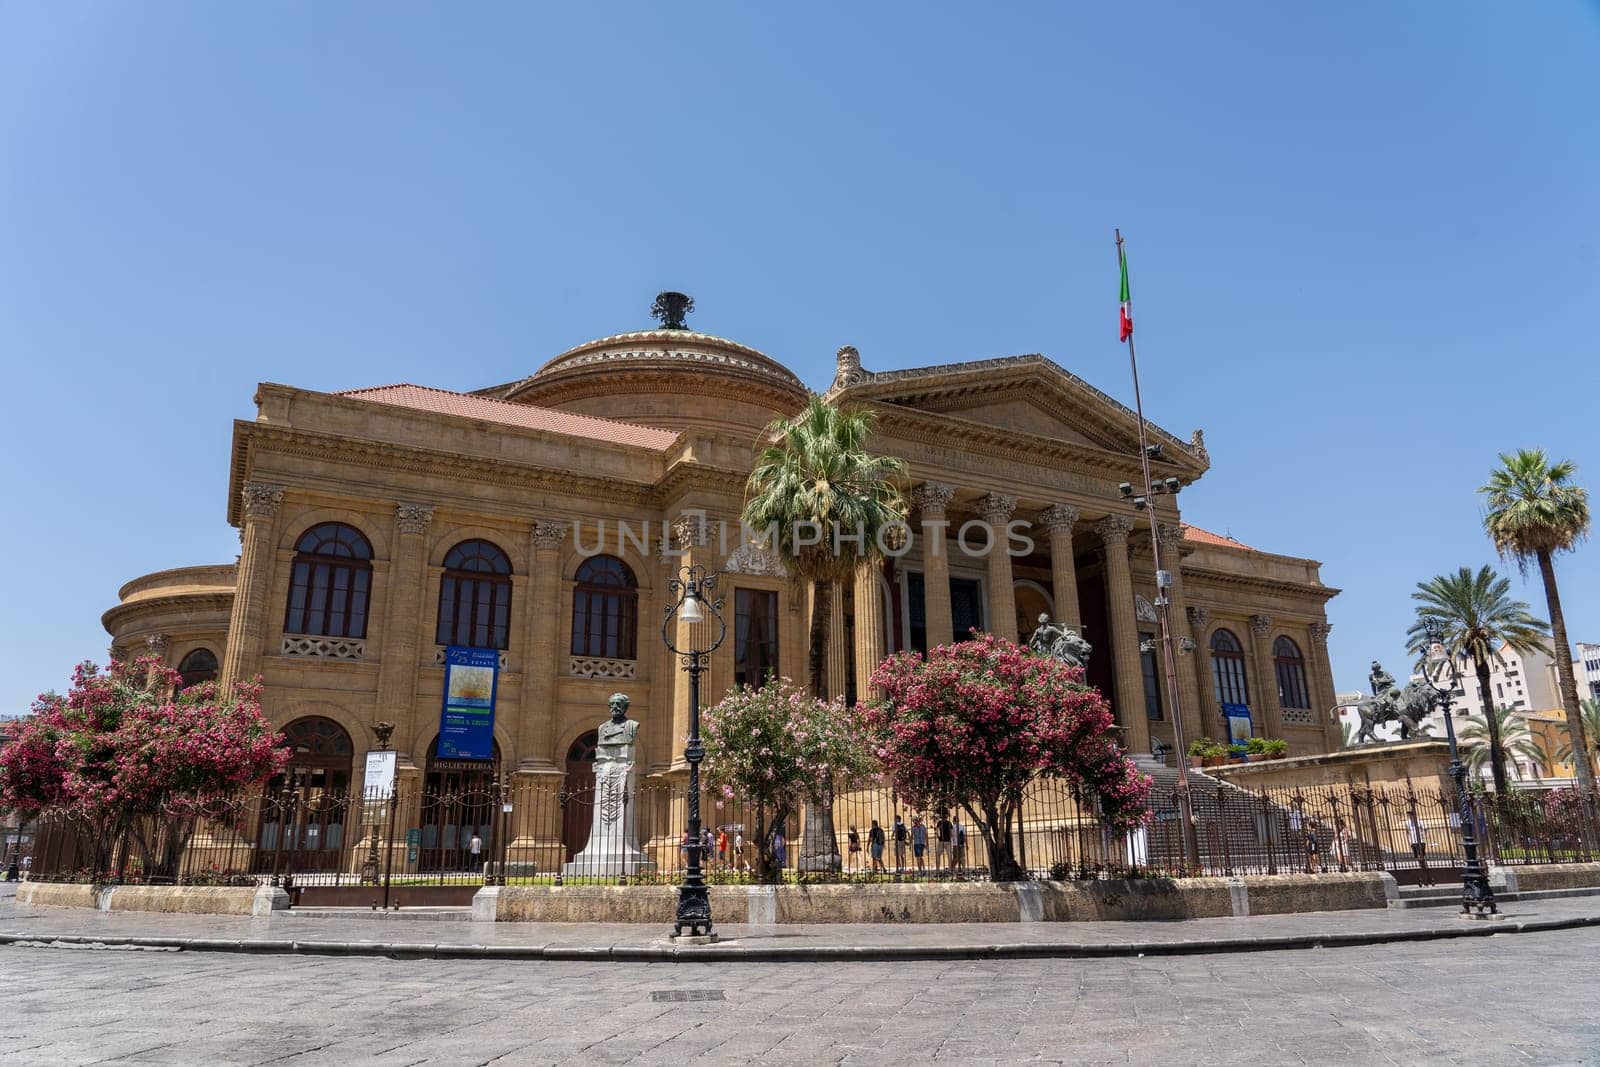 Teatro Massimo in Palermo, Sicily by oliverfoerstner